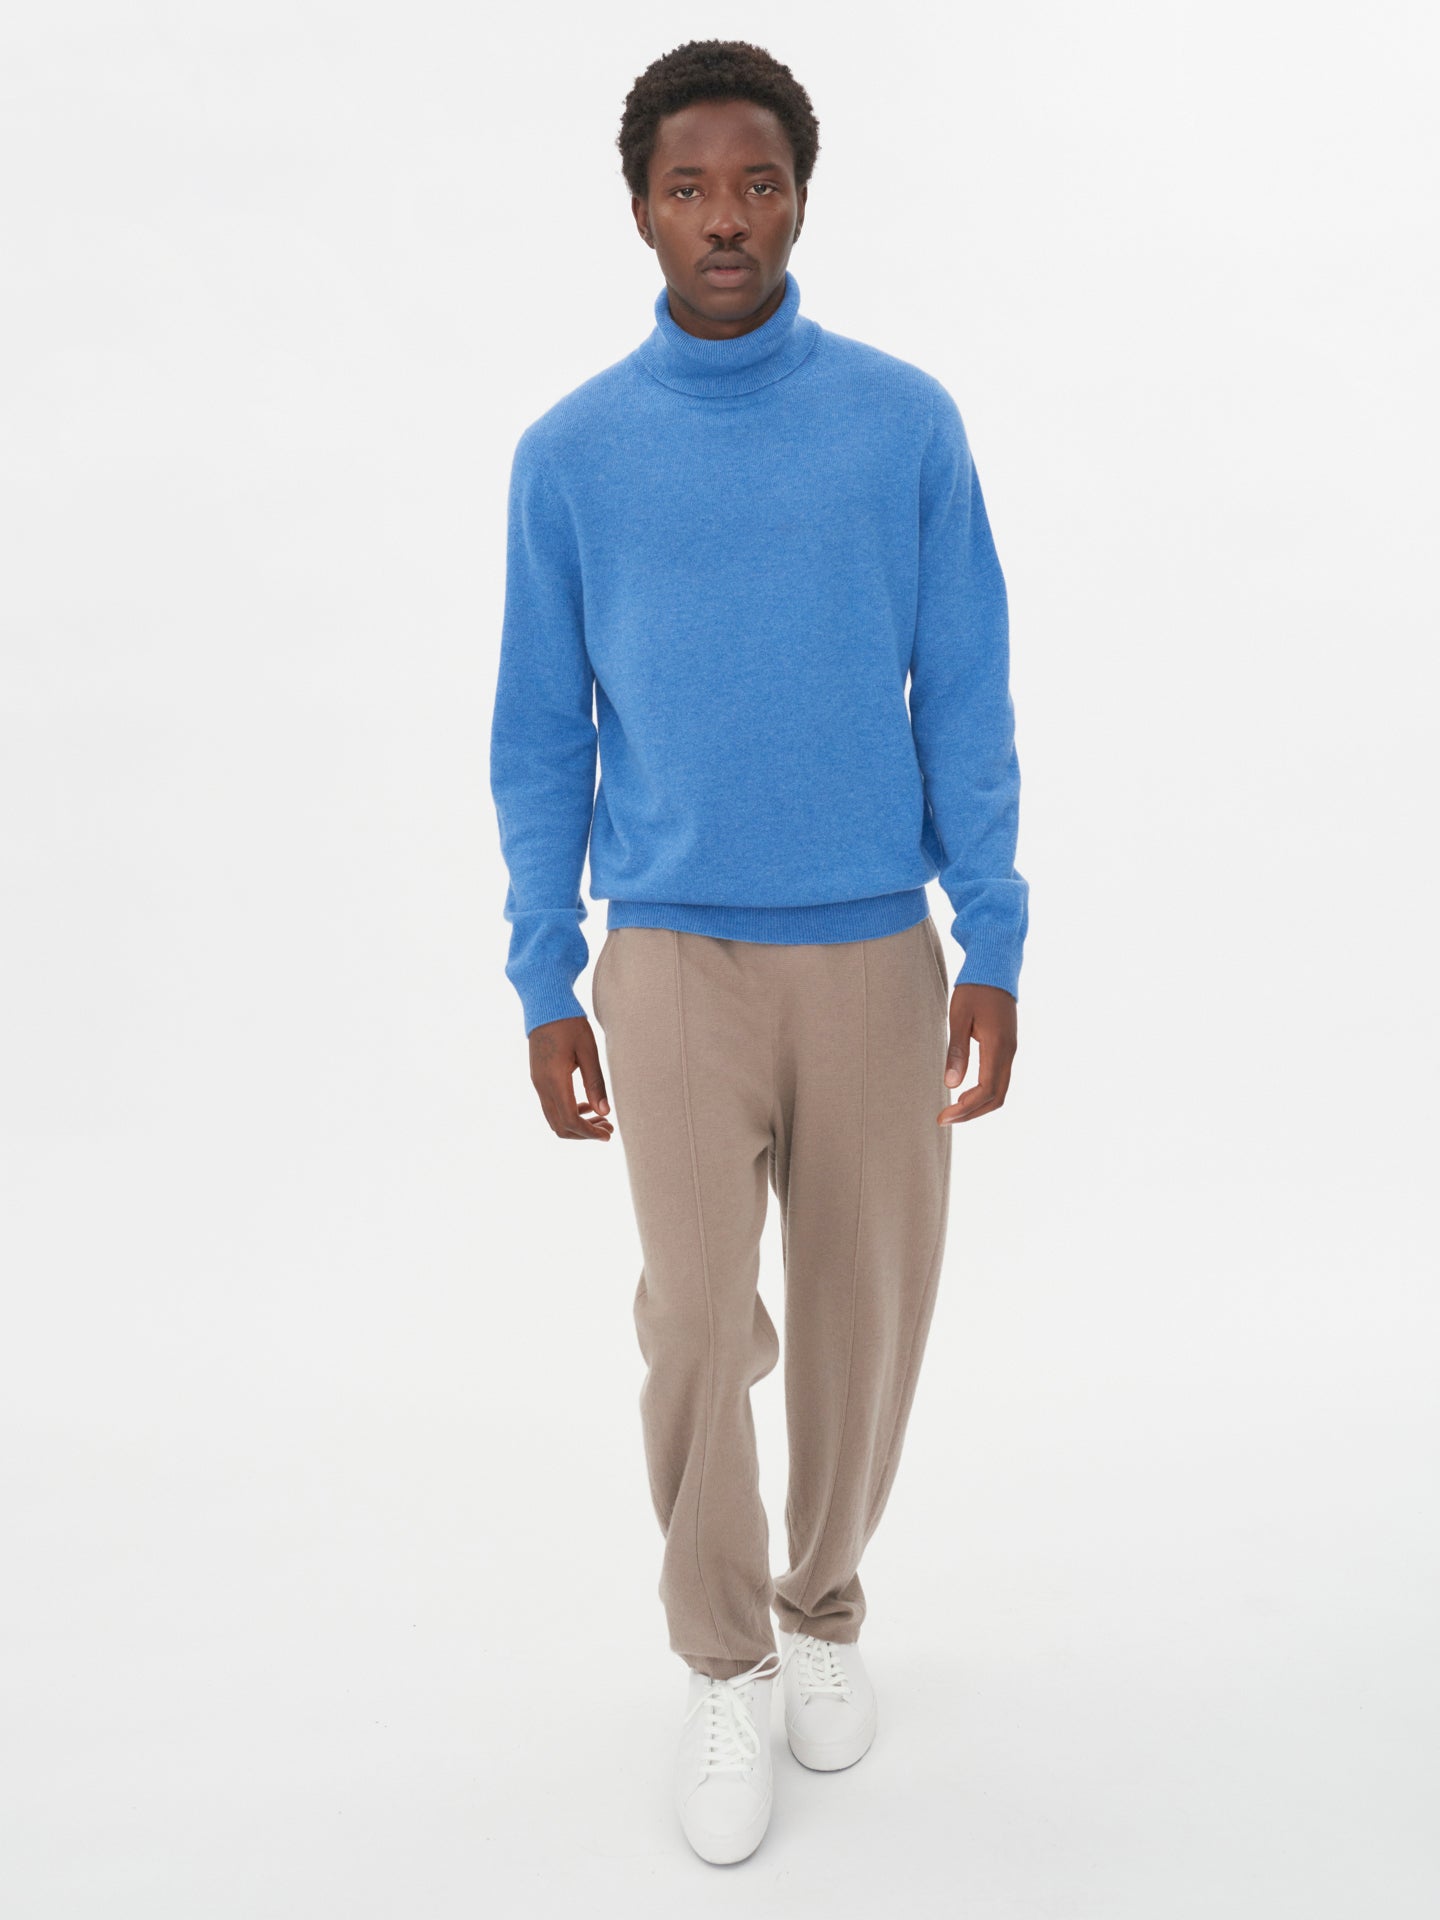 Men's Cashmere Basic Turtle Neck Sweater Blue - Gobi Cashmere